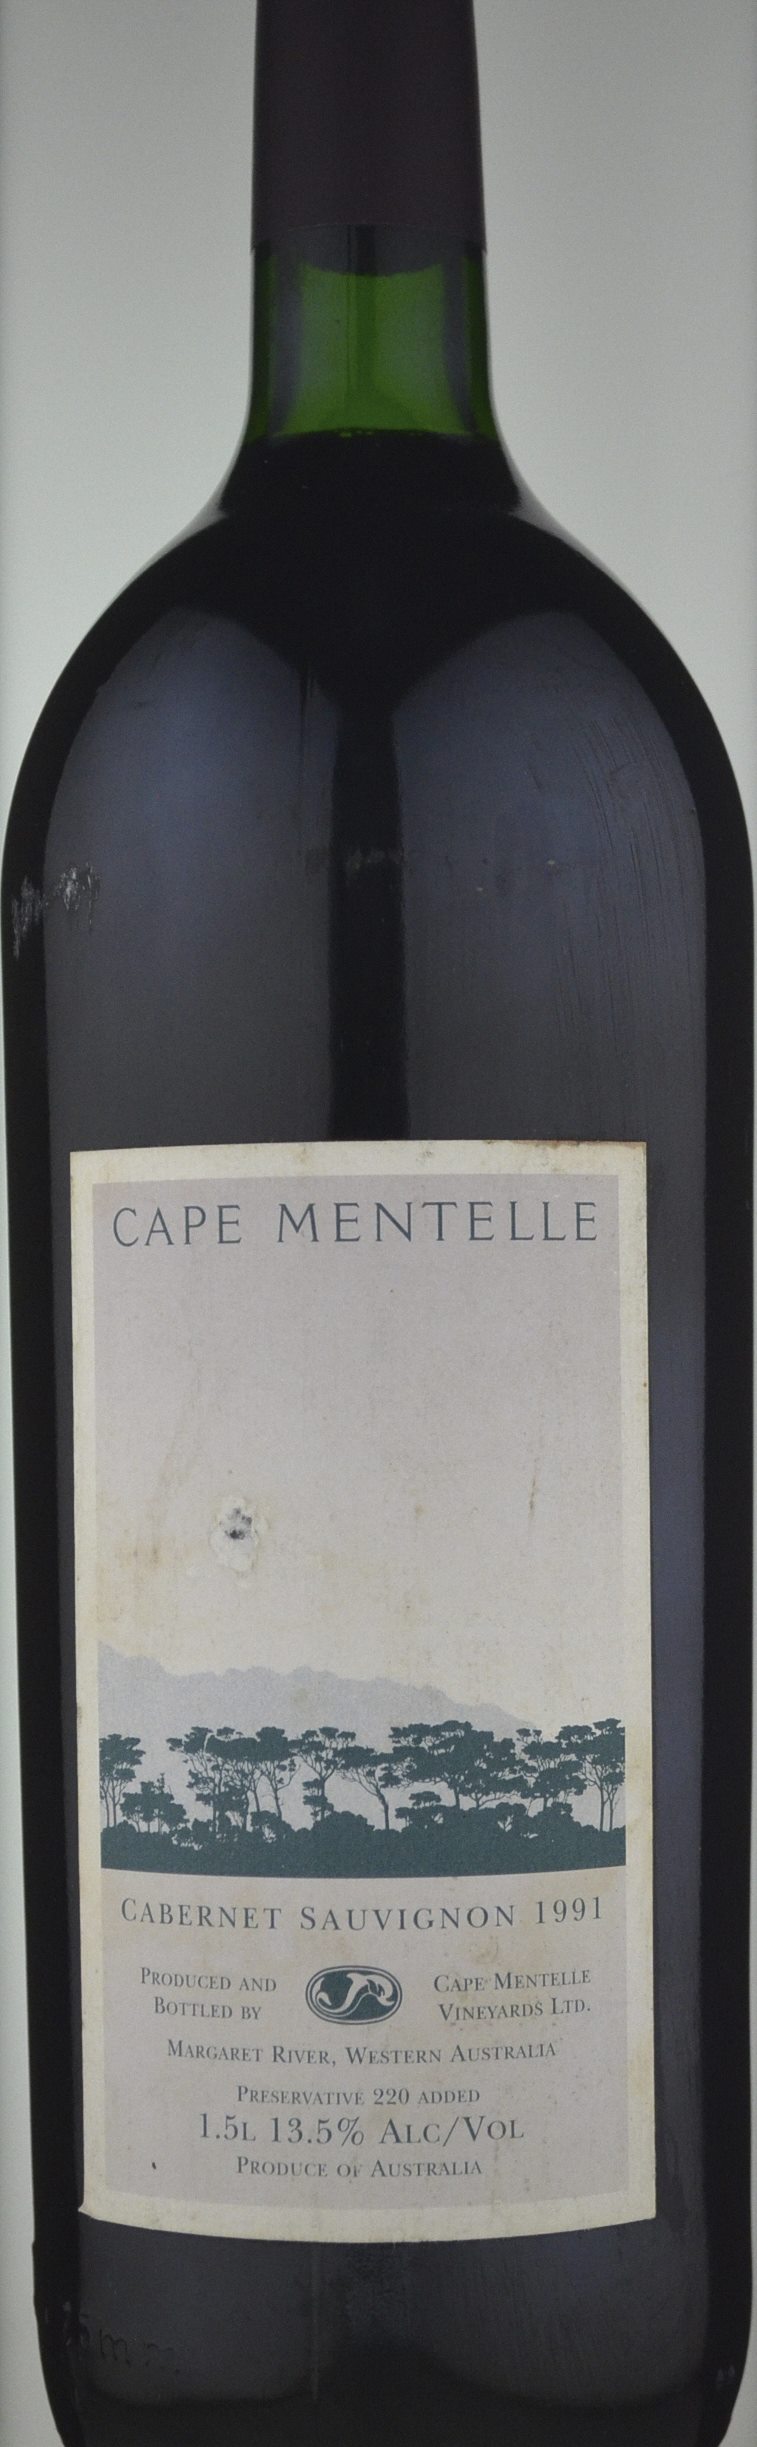 Cape Mentelle Cabernet Sauvignon 1991